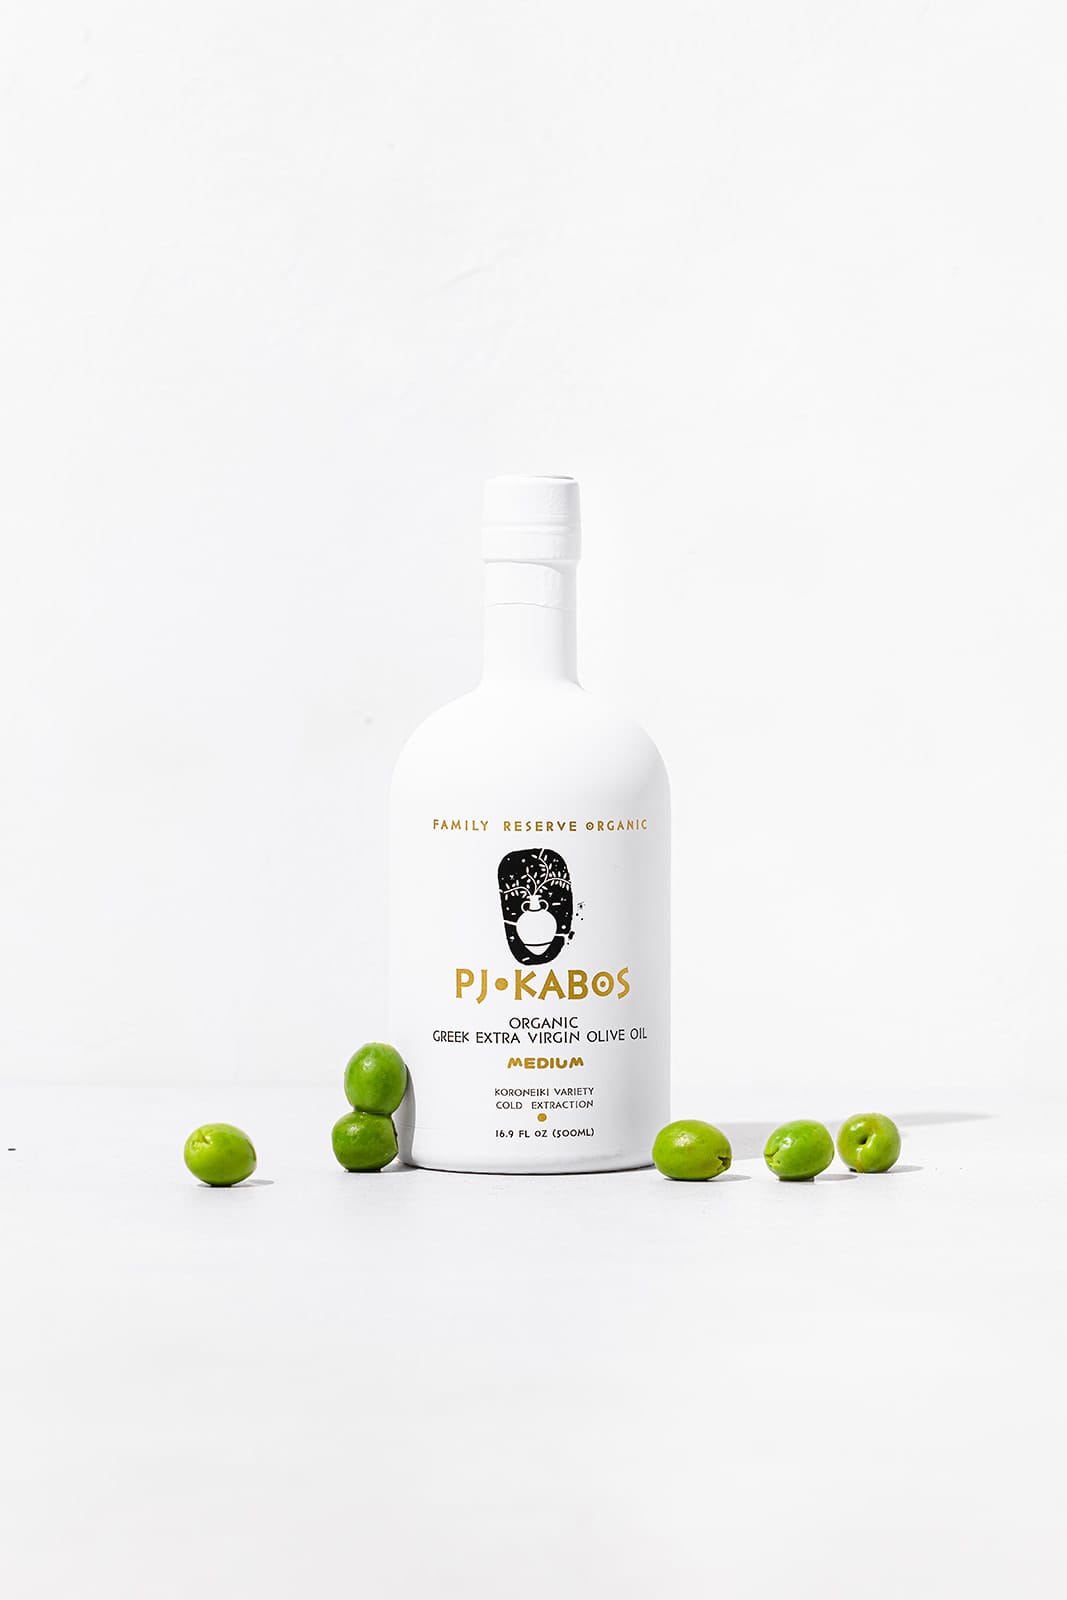 A signature white bottle of PJ Kabos Extra Virgin Olive Oil’s Organic - Medium taste intensity 